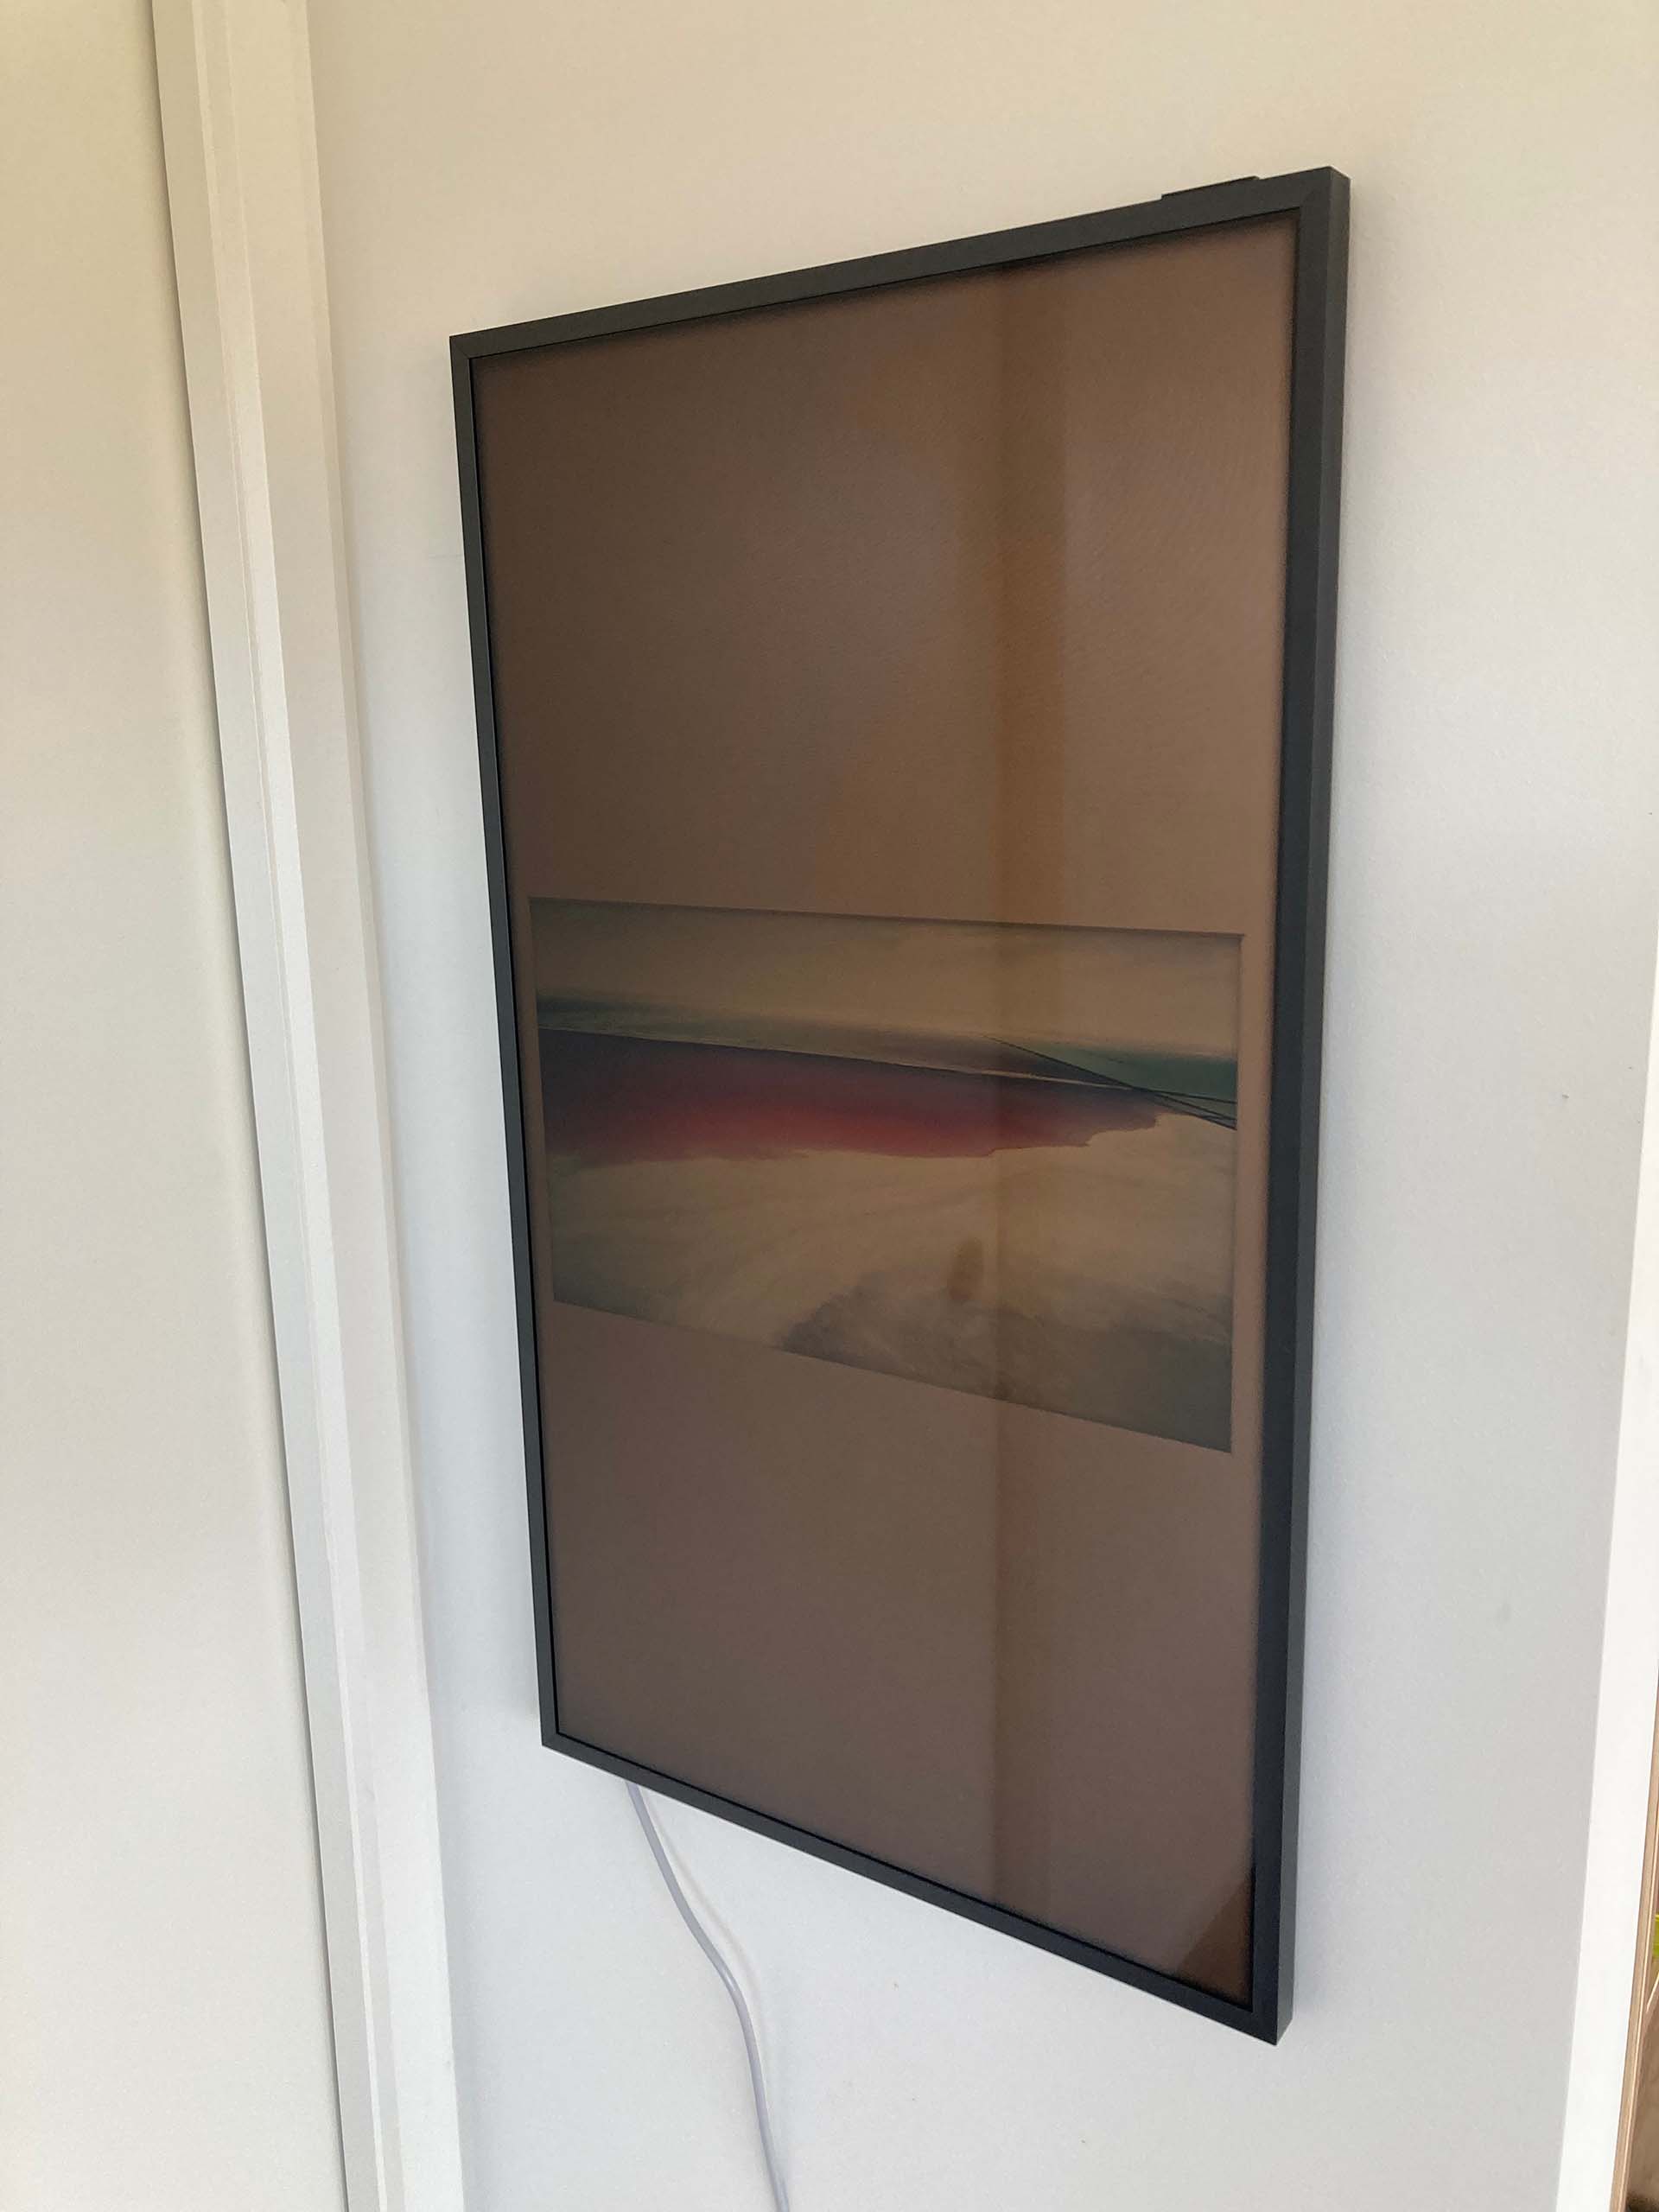 The Frame TV Installed